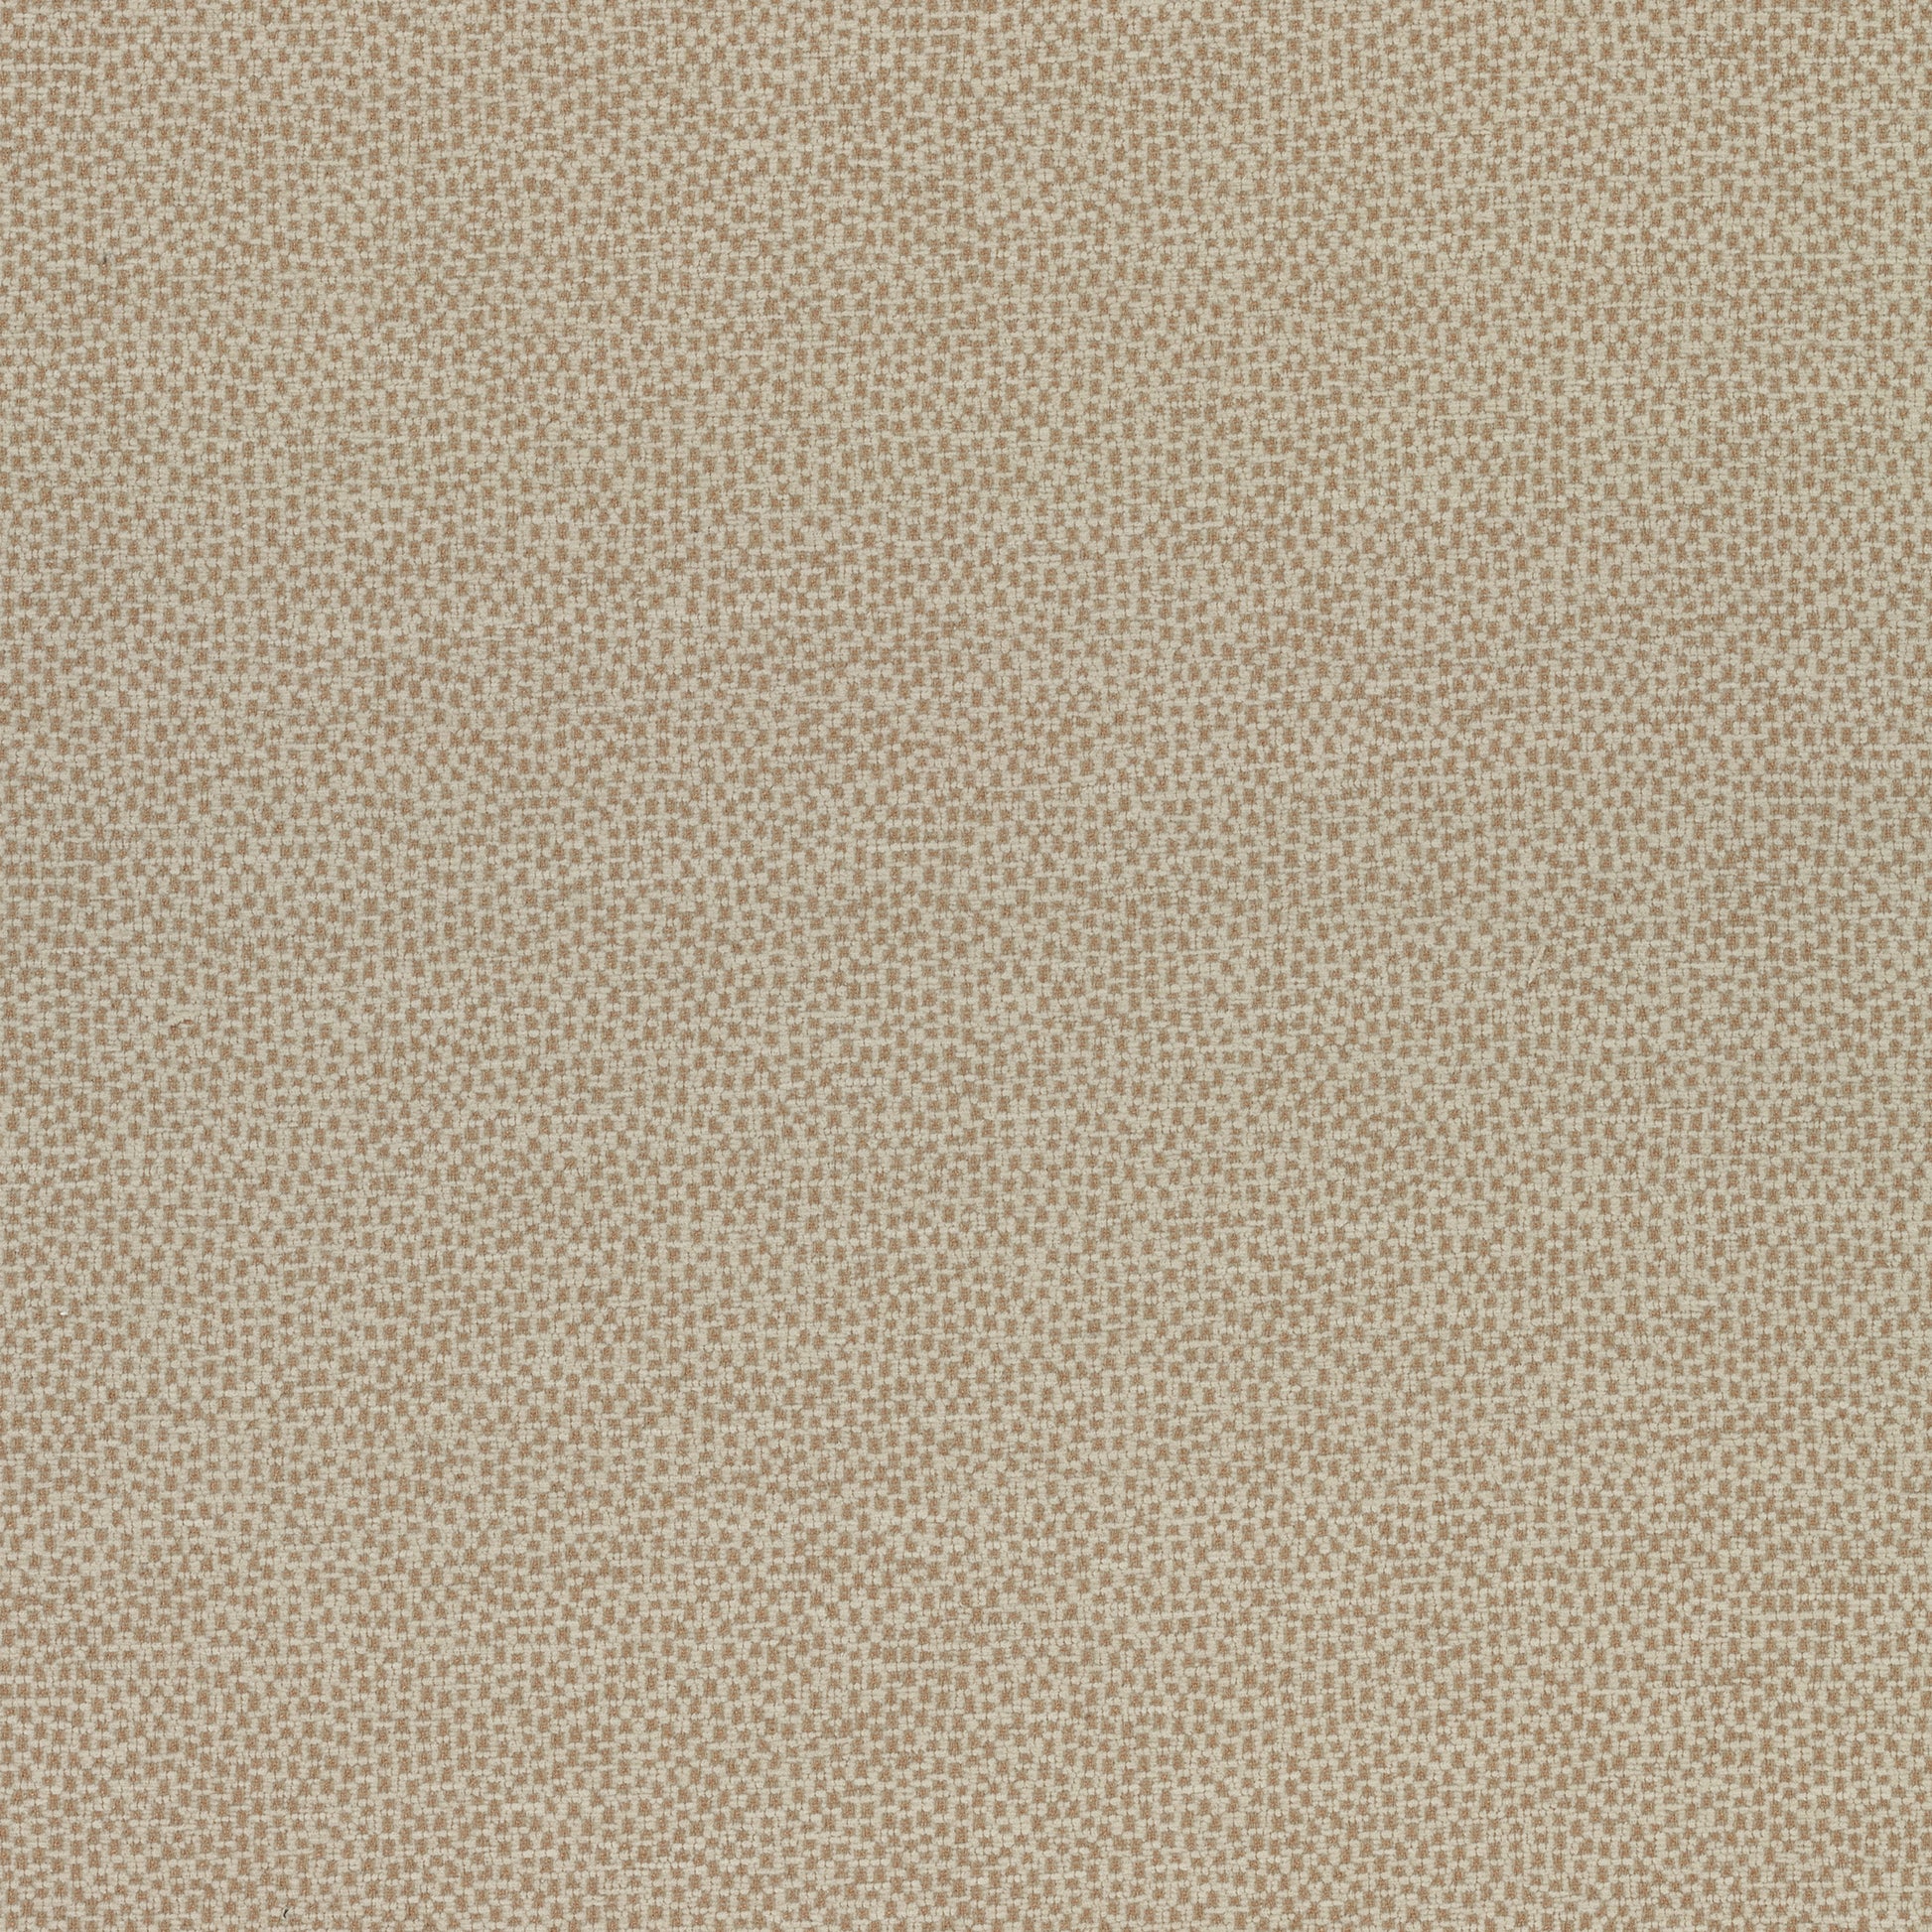 Purchase Thibaut Fabric Pattern W74076 pattern name Nala color Sand